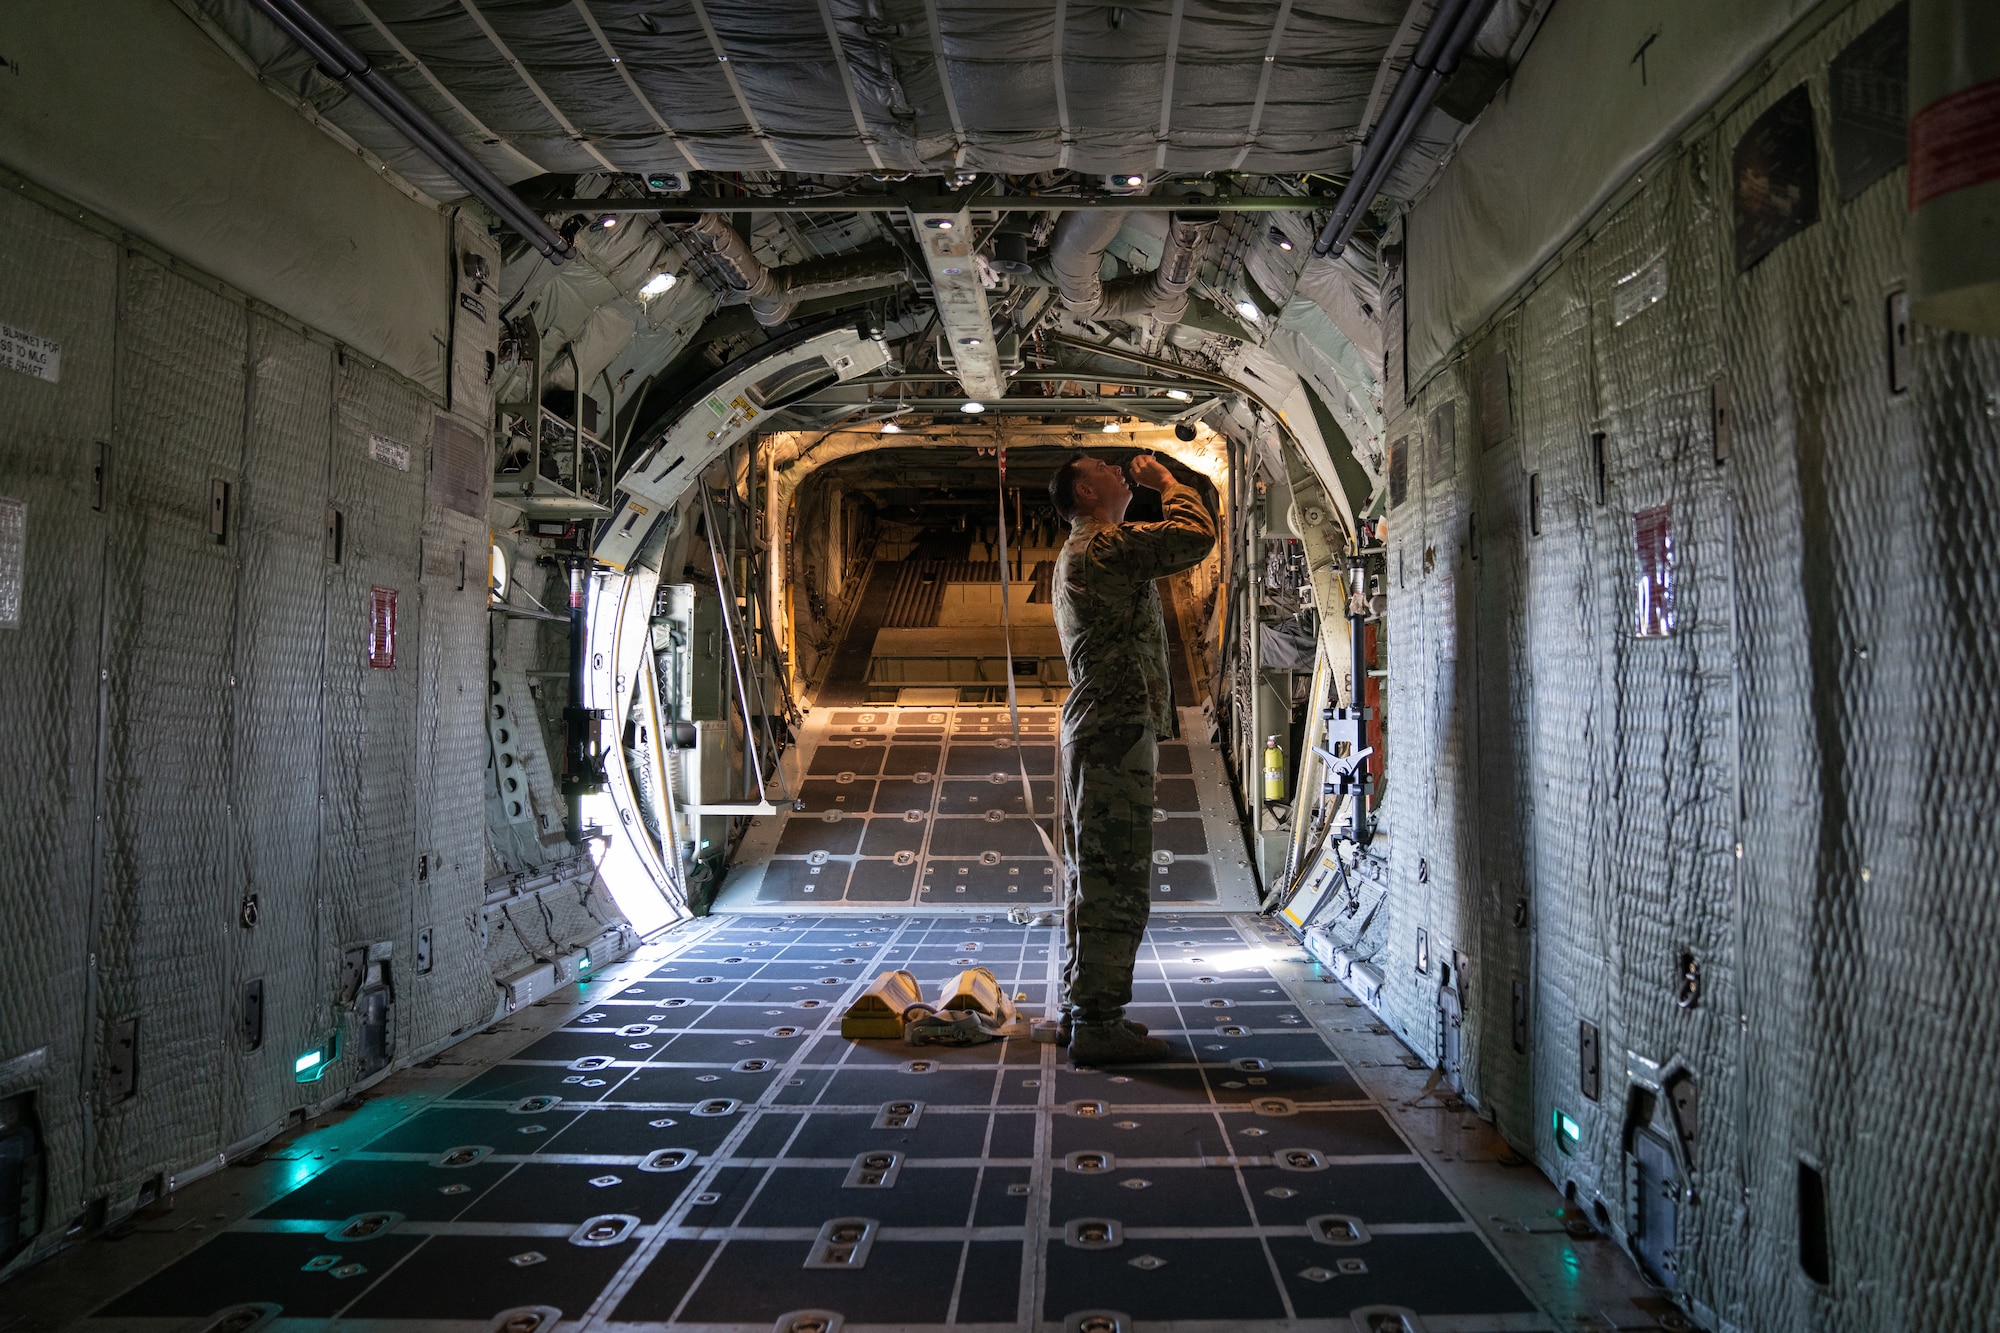 Flight engineer conducts pre-flight checks on a C-130